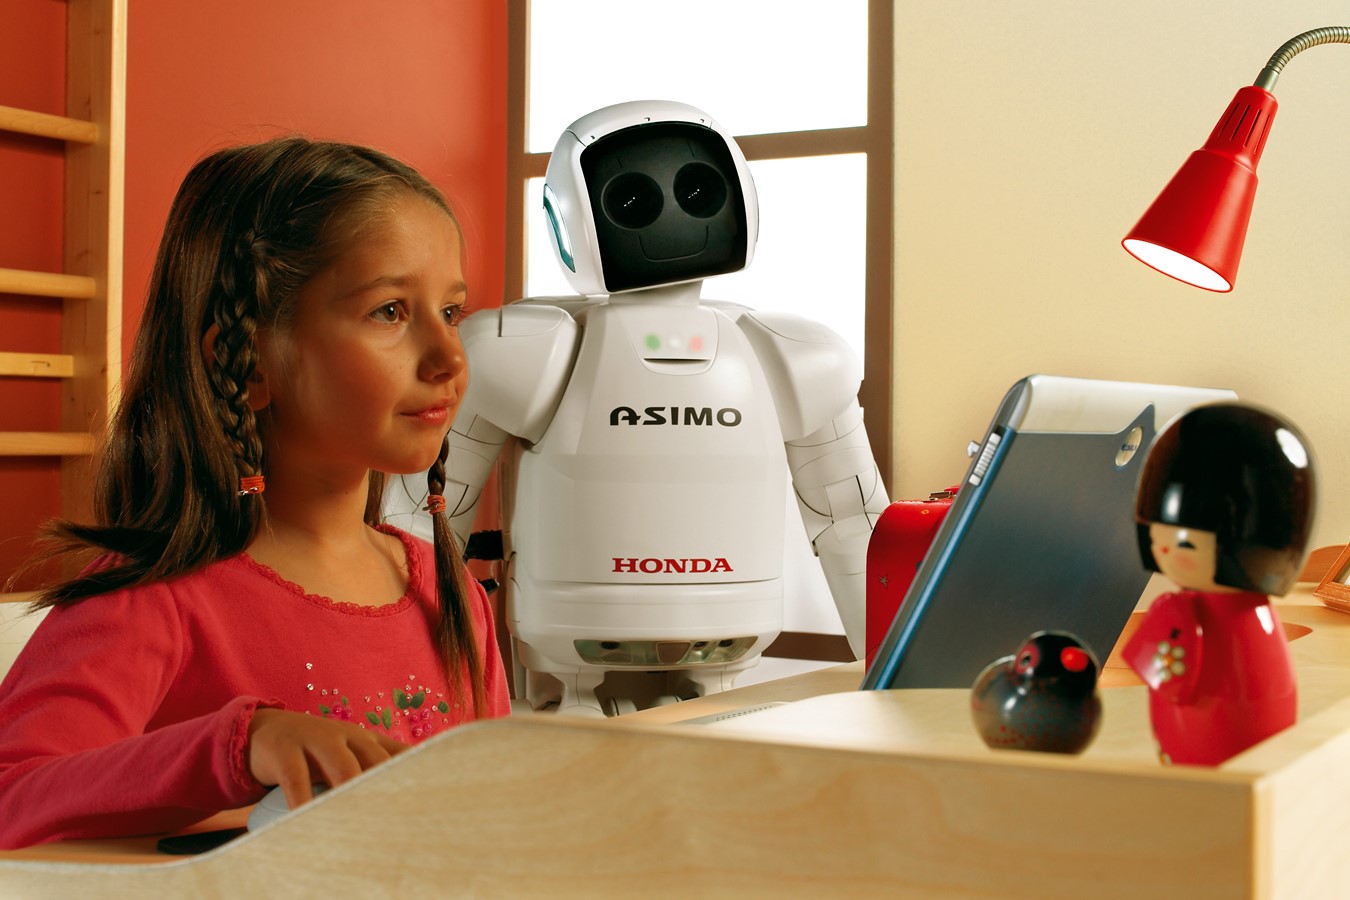 Honda's Latest ASIMO Humanoid Robot Races into Barcelona for European Debut